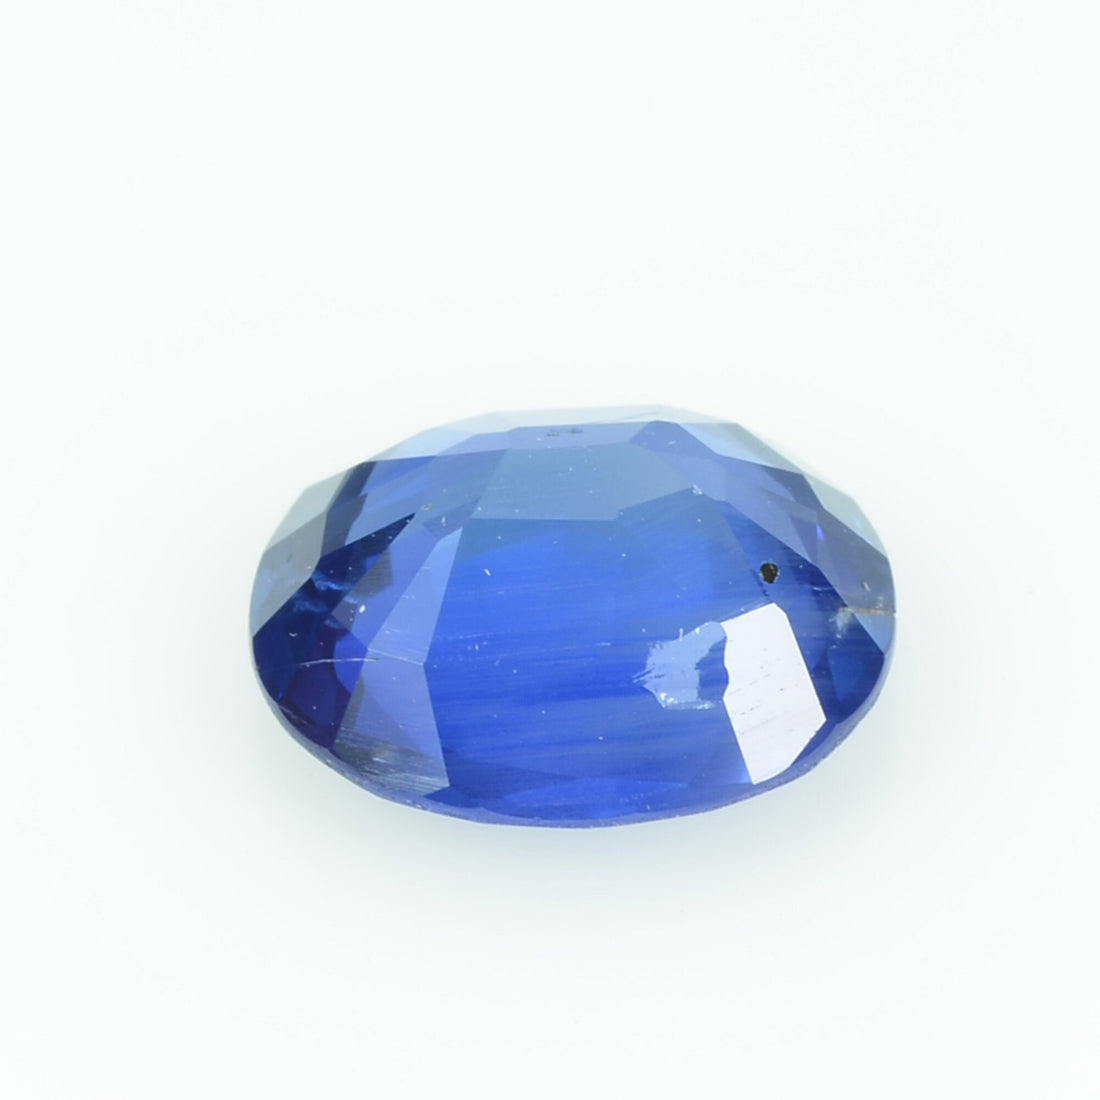 2.44 cts Unheated Burma Natural Blue Sapphire Loose Gemstone Oval Cut